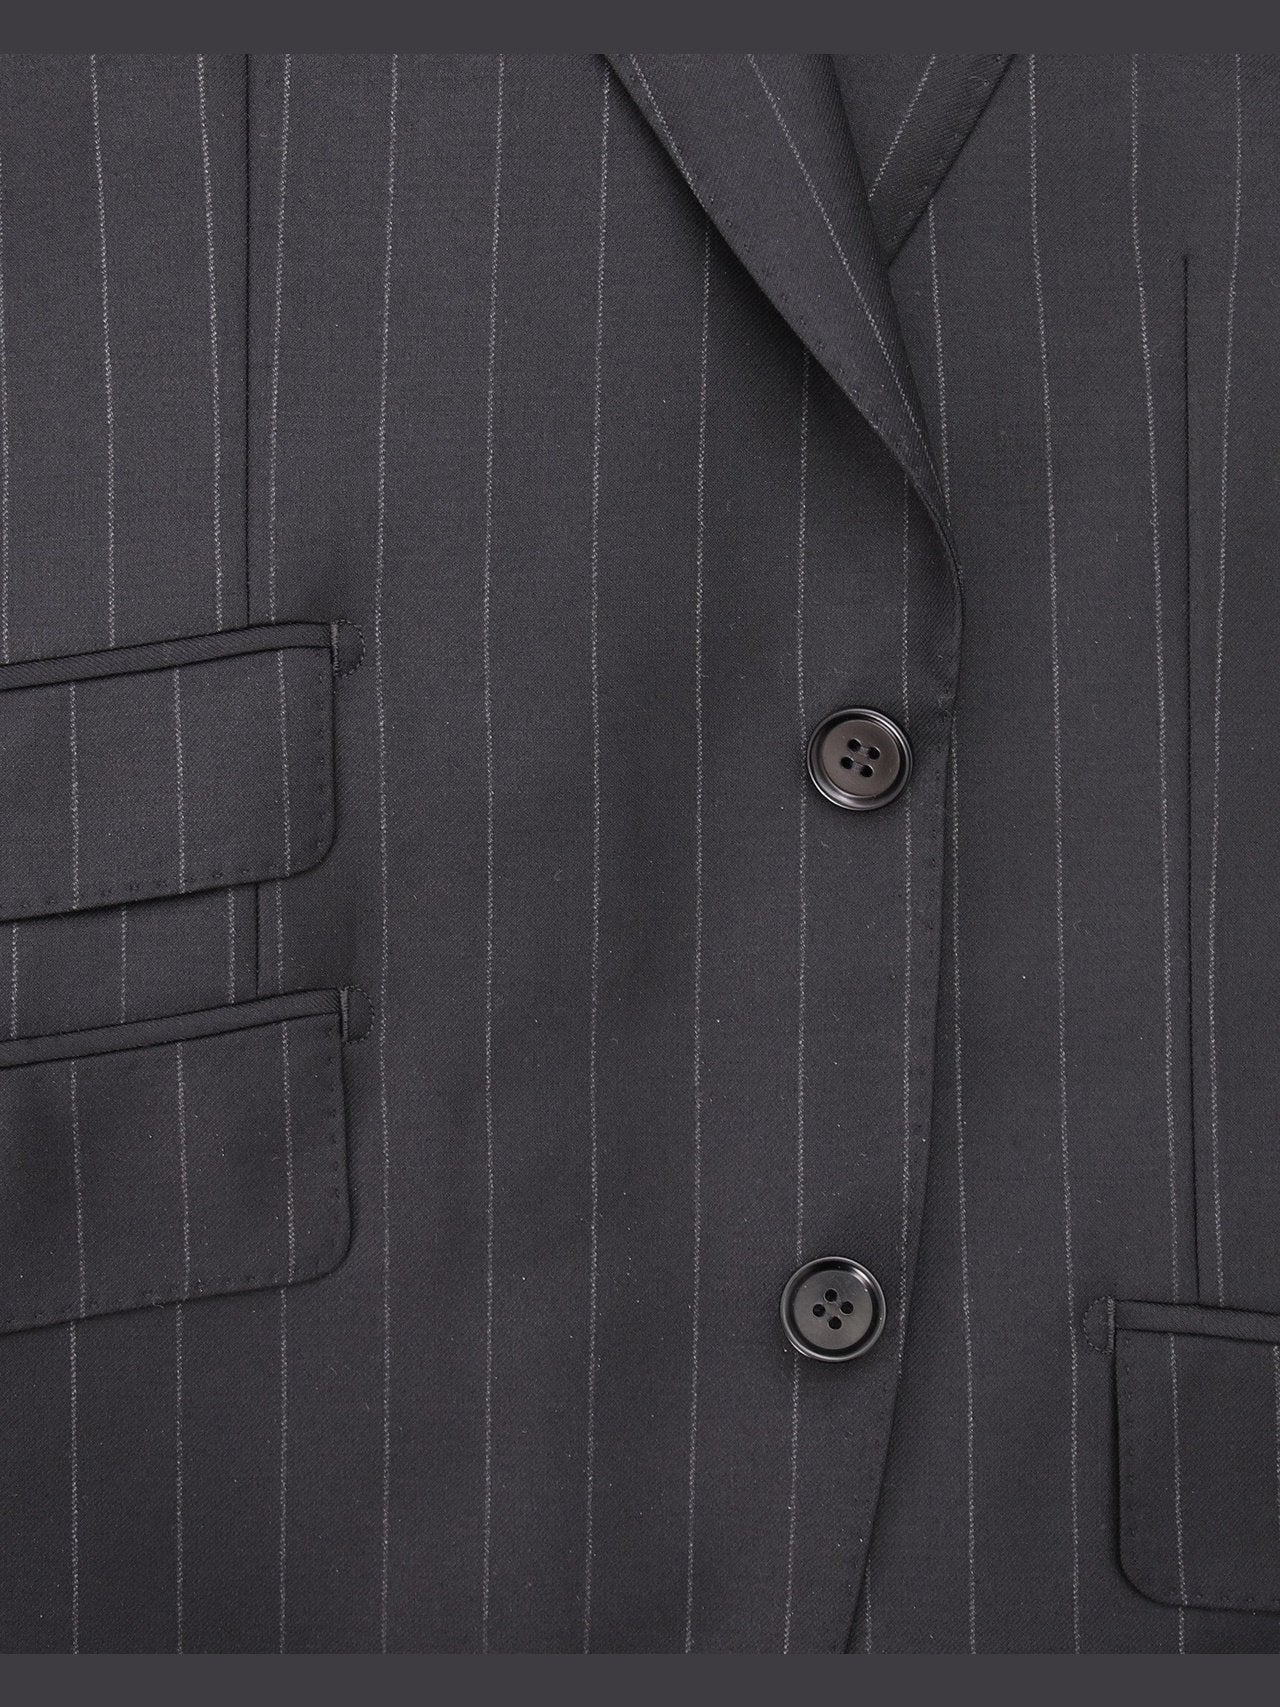 Napoli SUITS Napoli Mens Black Pinstripe 100% Loro Piana Italian Wool Slim Fit Suit